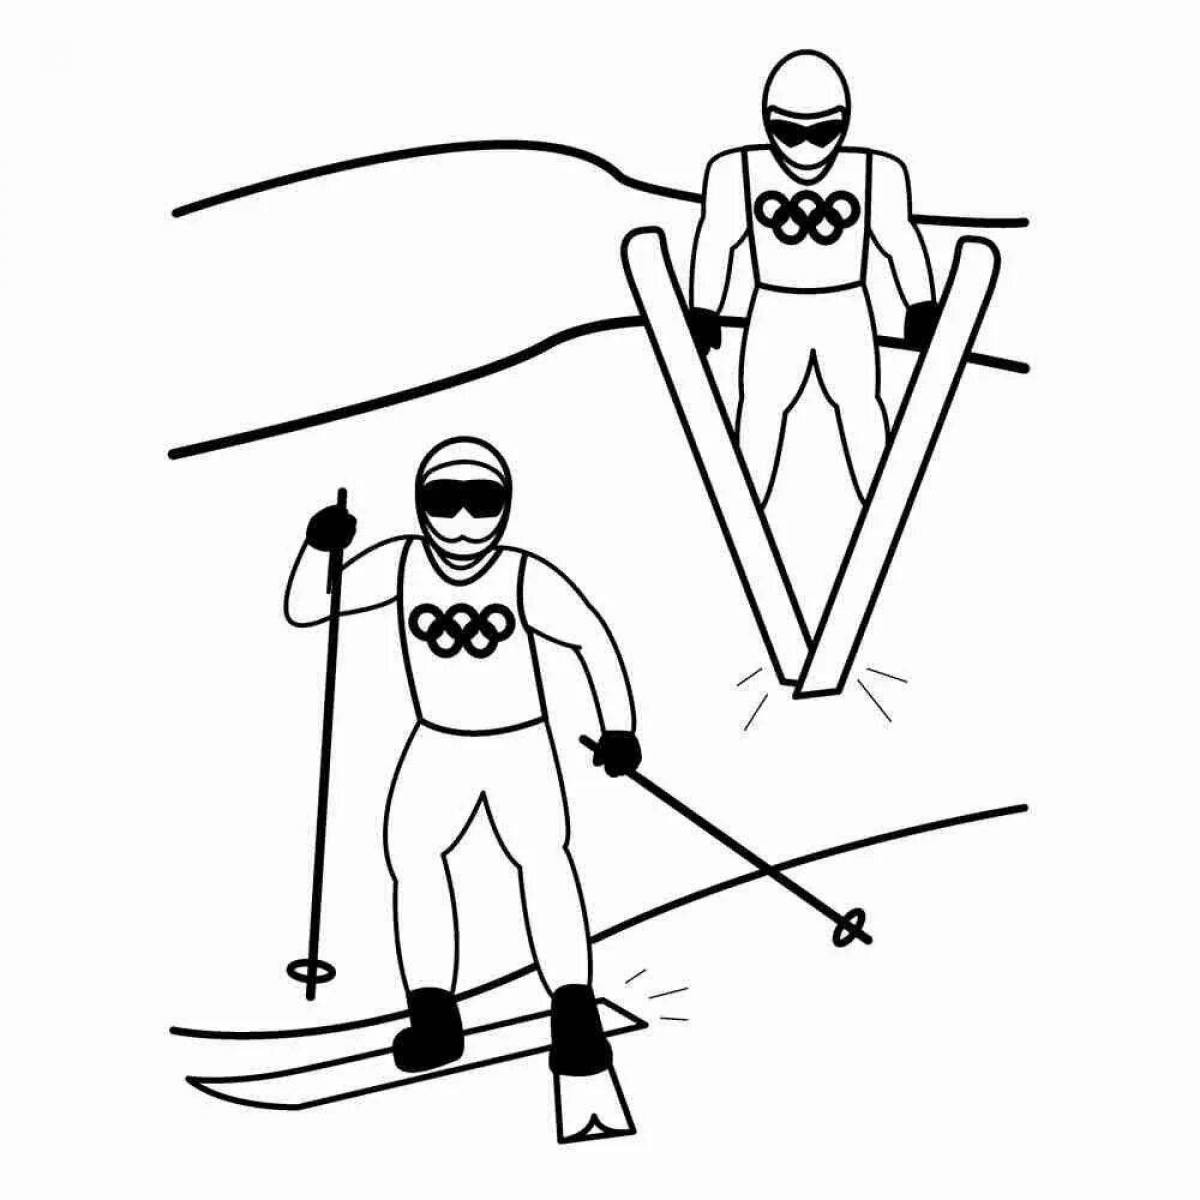 Cross-country skiing #4